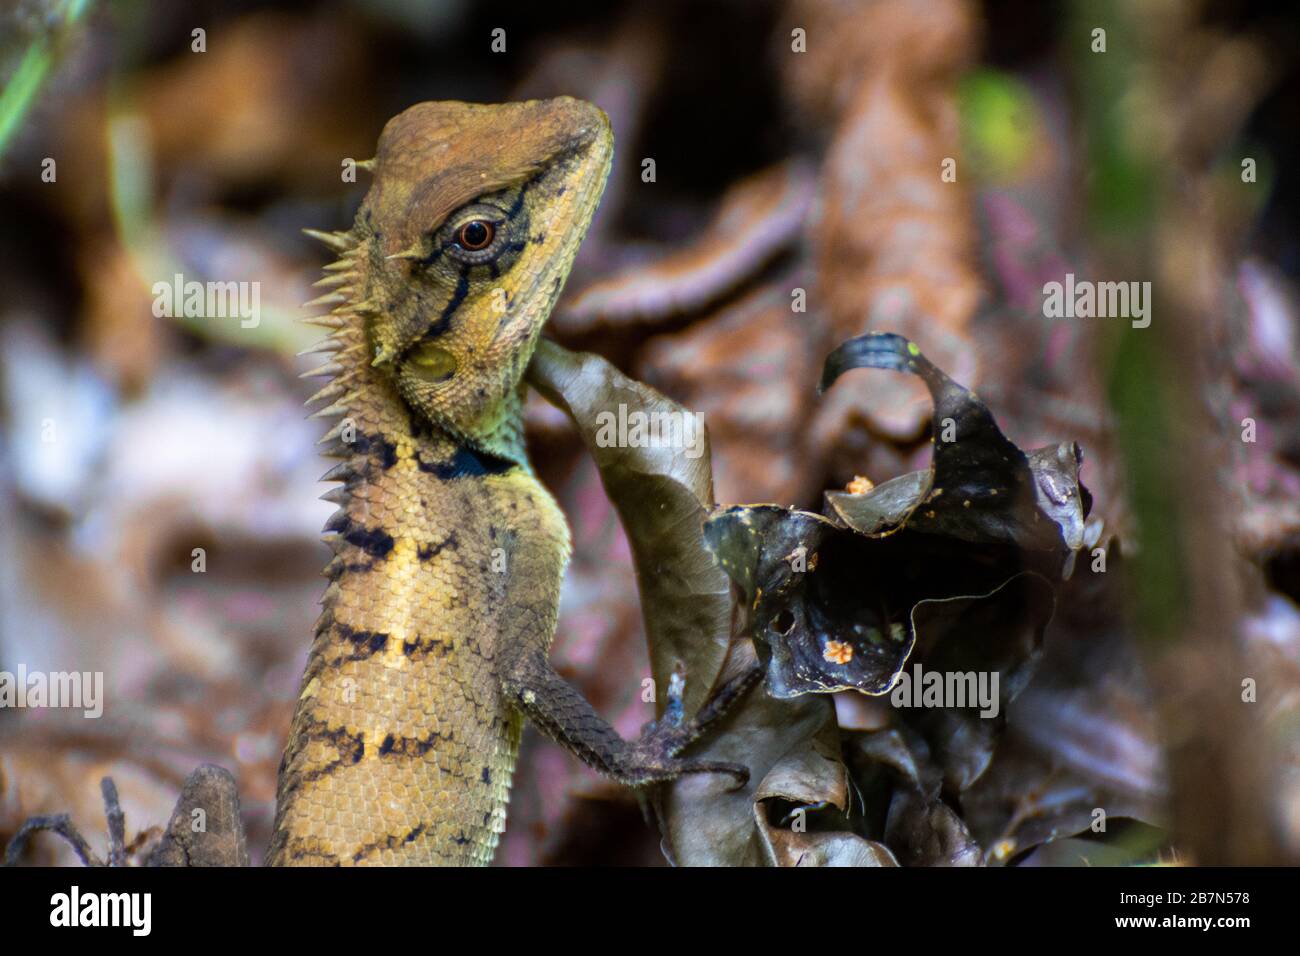 A lizard in Southeast Asia Stock Photo